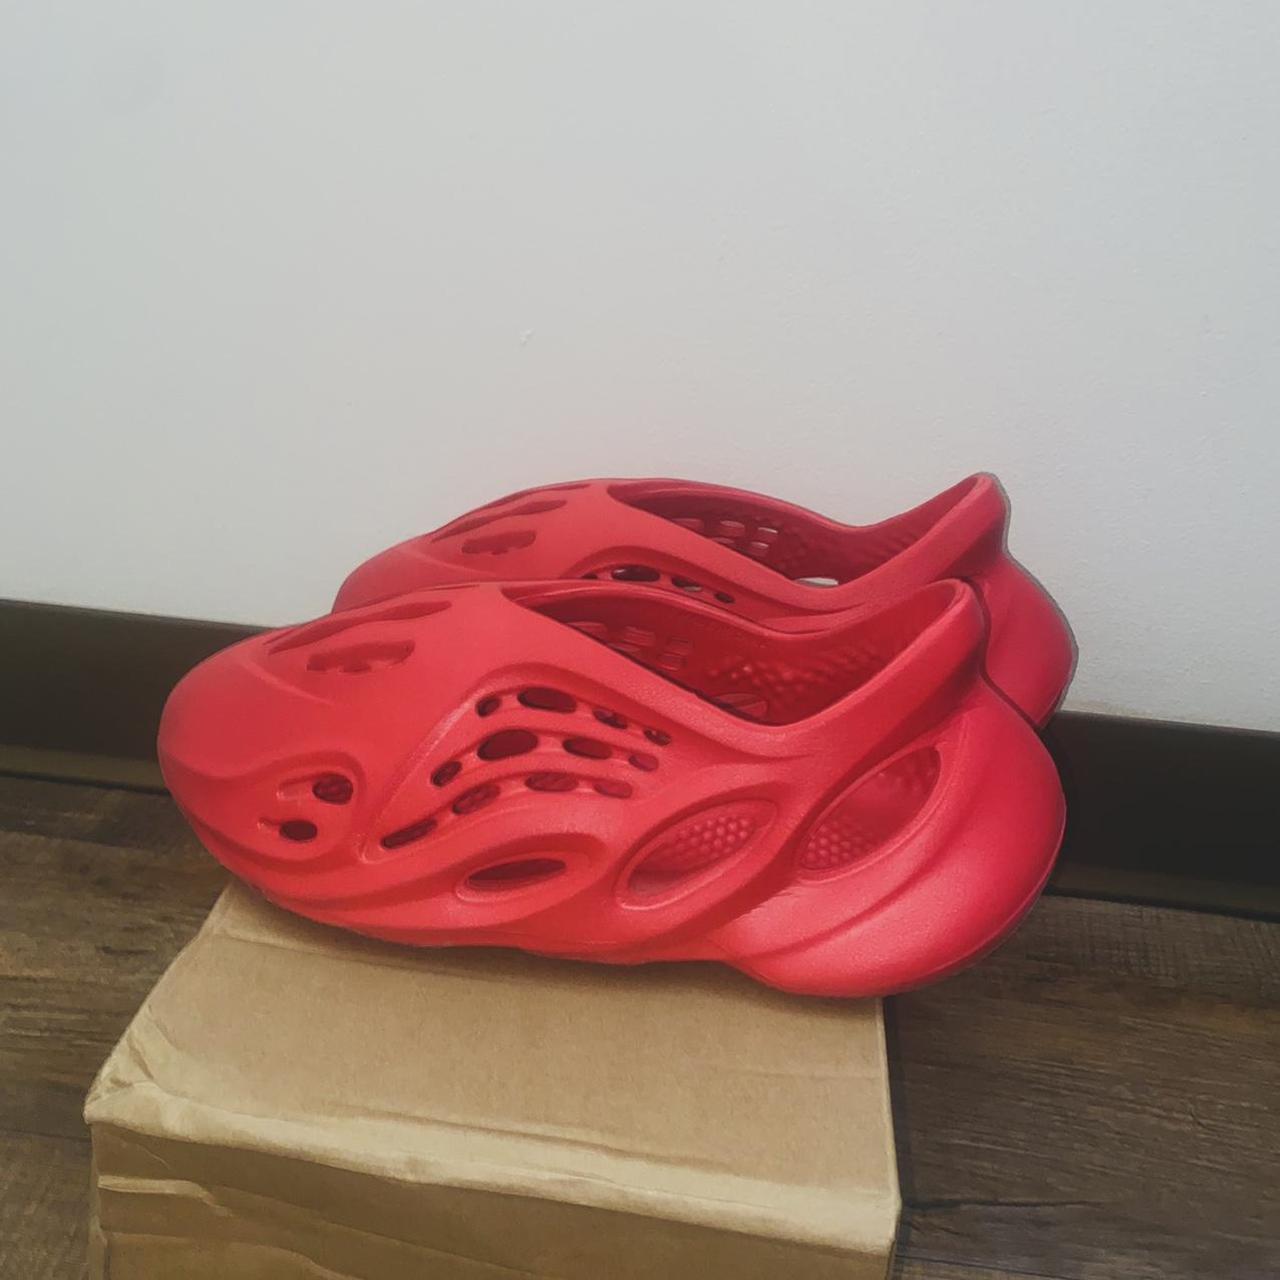 yeezy foam runners. red. condition 8.5/10 size... - Depop